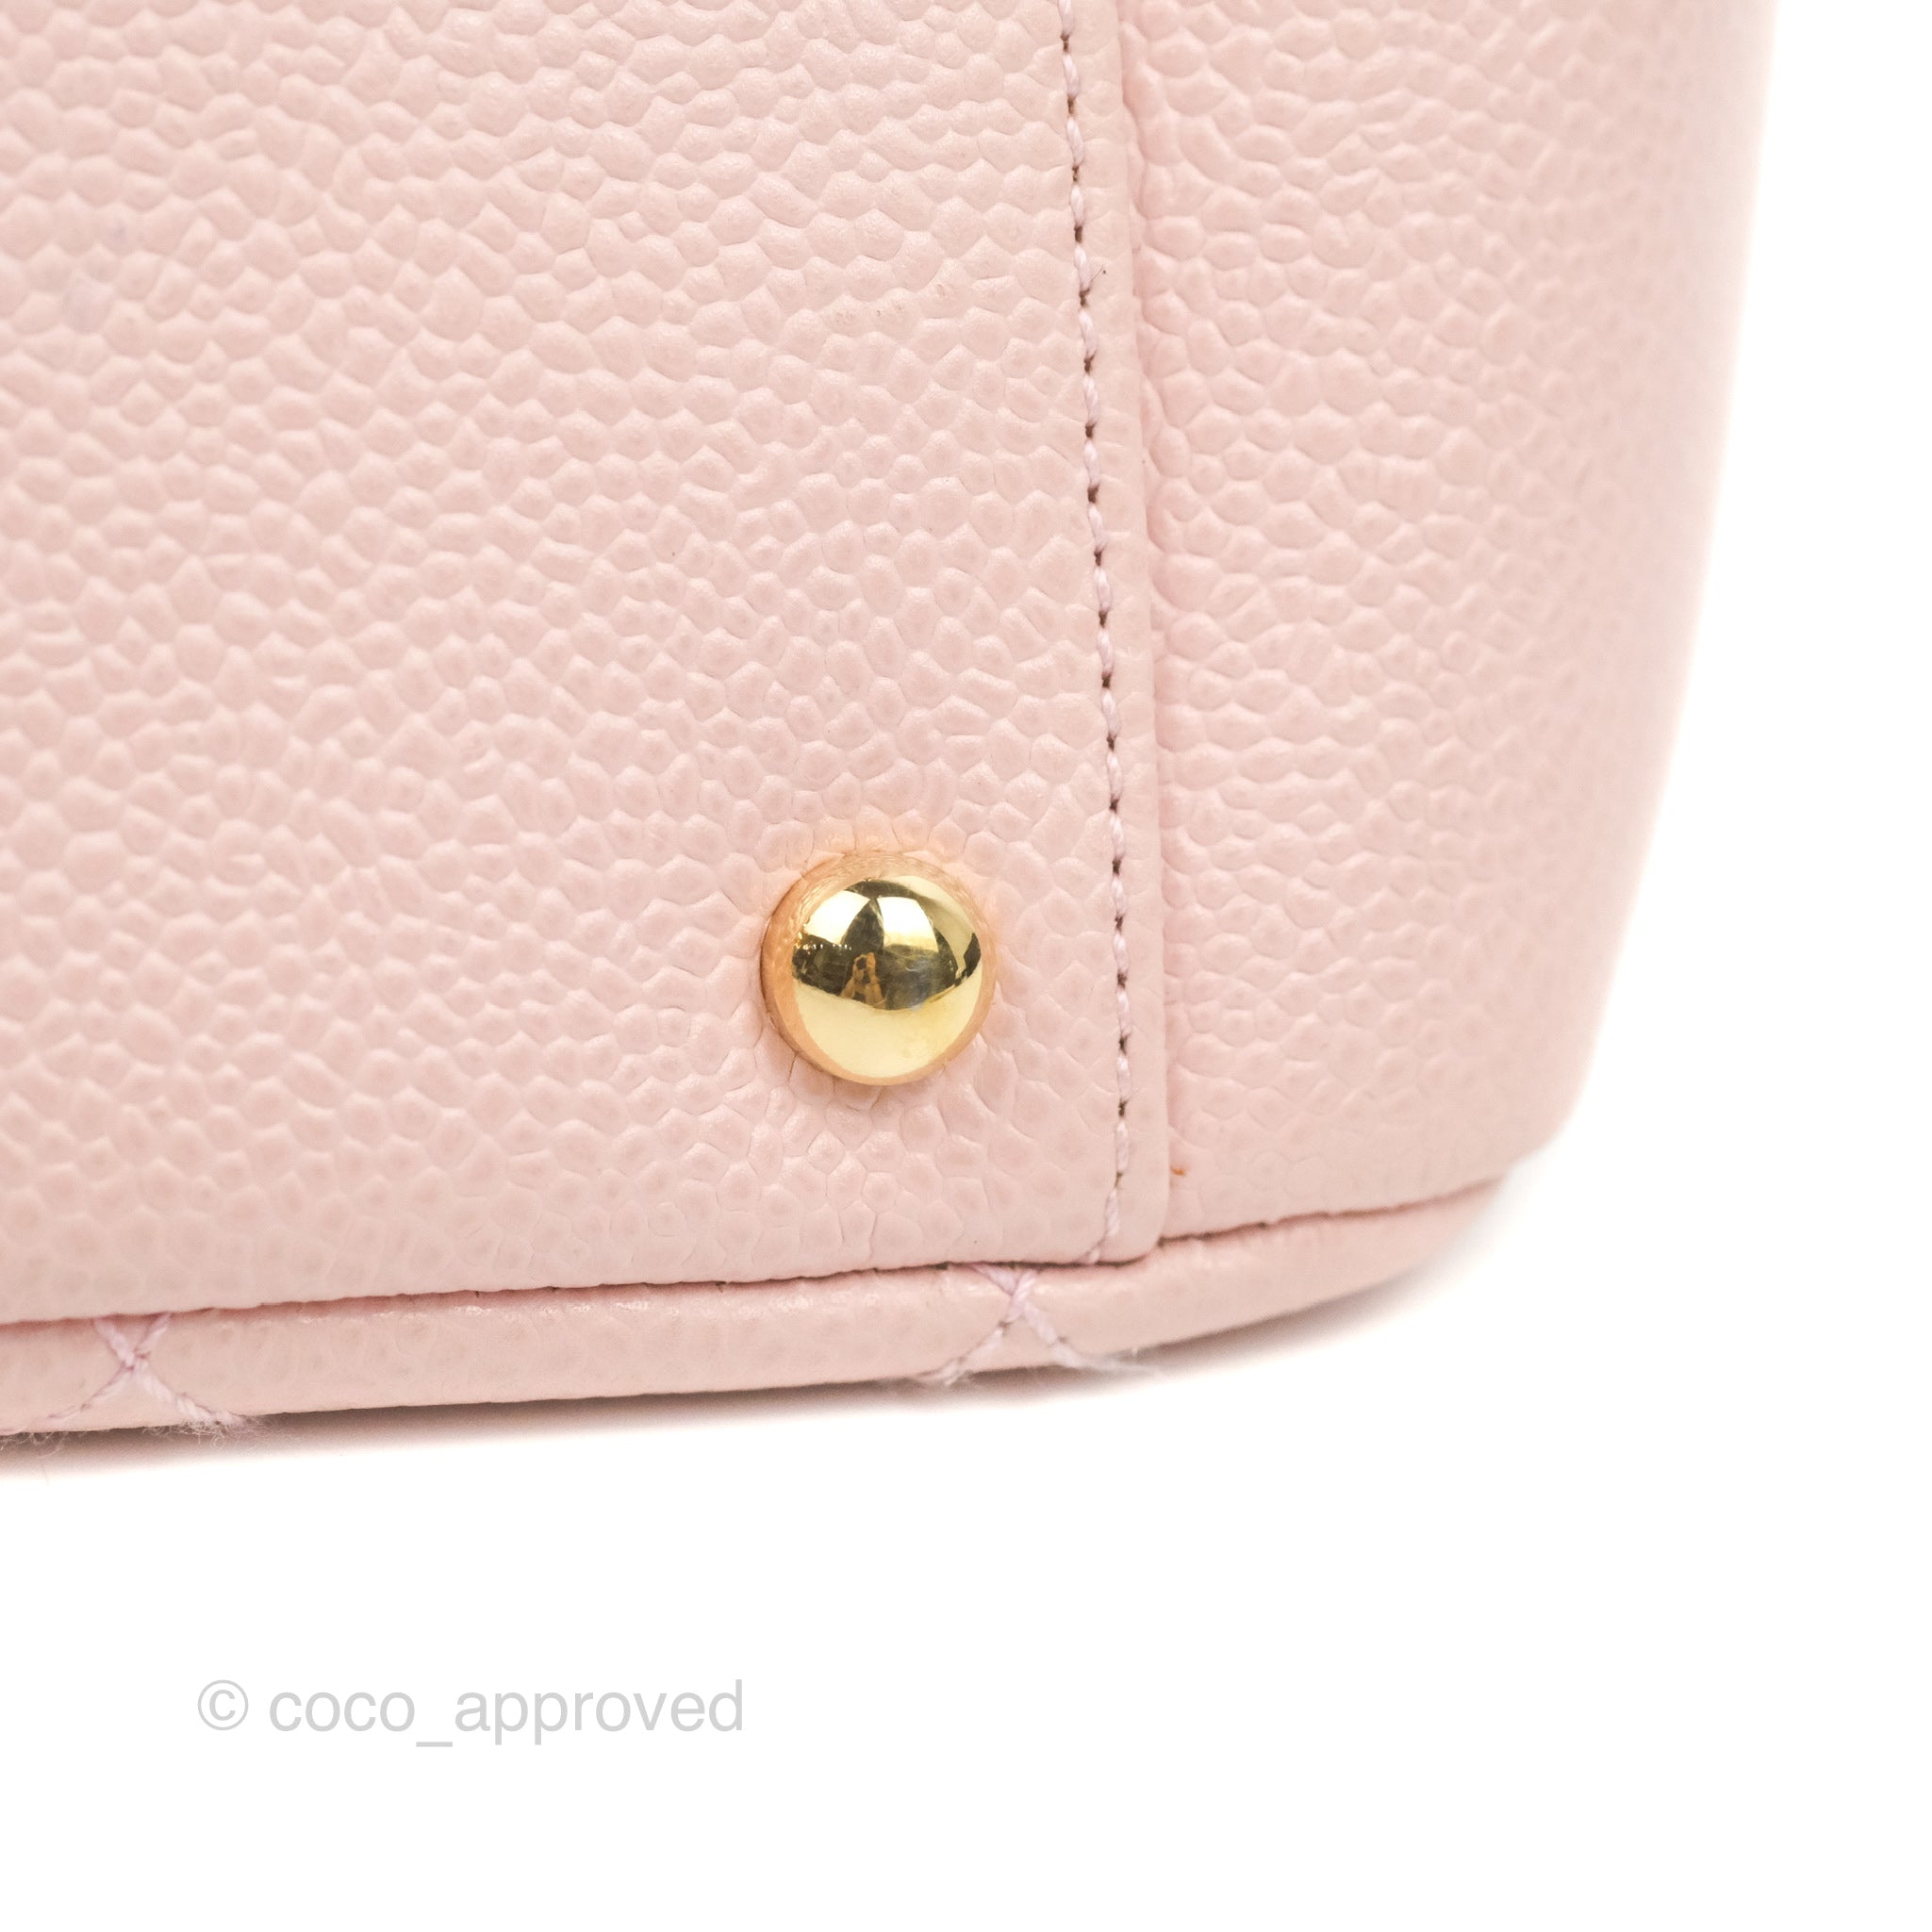 Chanel Pink Caviar Petite Timeless Shopper Tote PTT Bag 24k GHW – Boutique  Patina